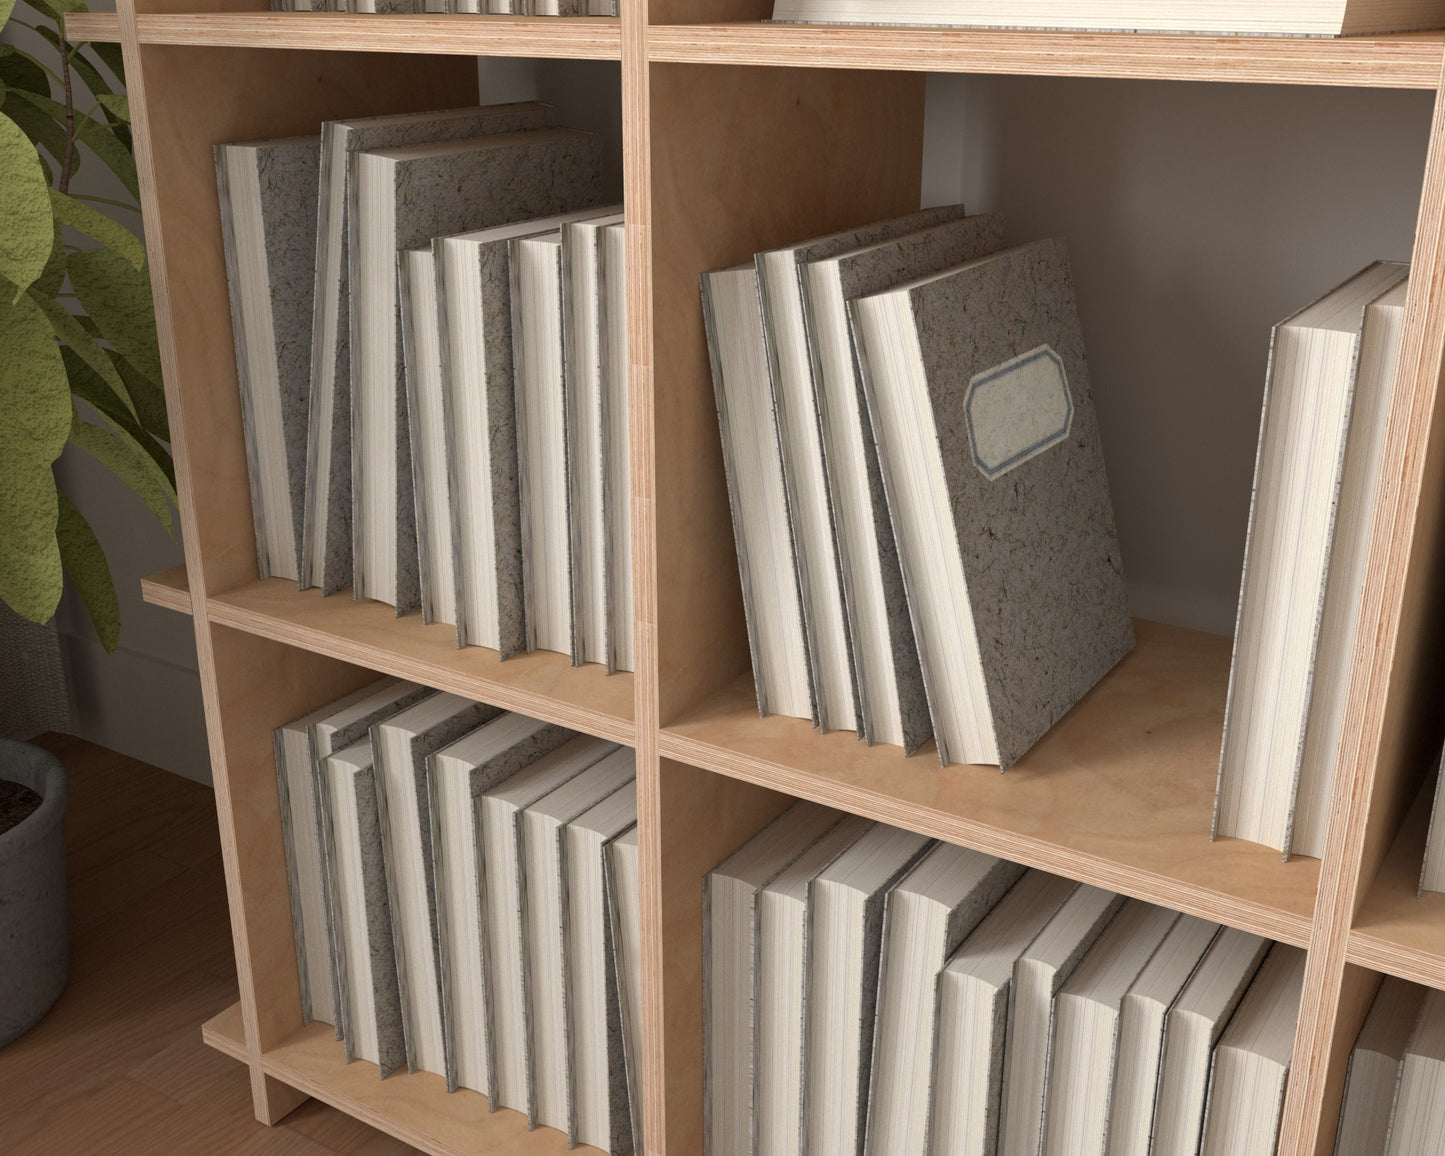 3x3 Modern Modular Plywood Bookshelf Kallax modules japandi design for vinyl records, books, music studio, home - 115x115x33cm / 45”x45”x13”